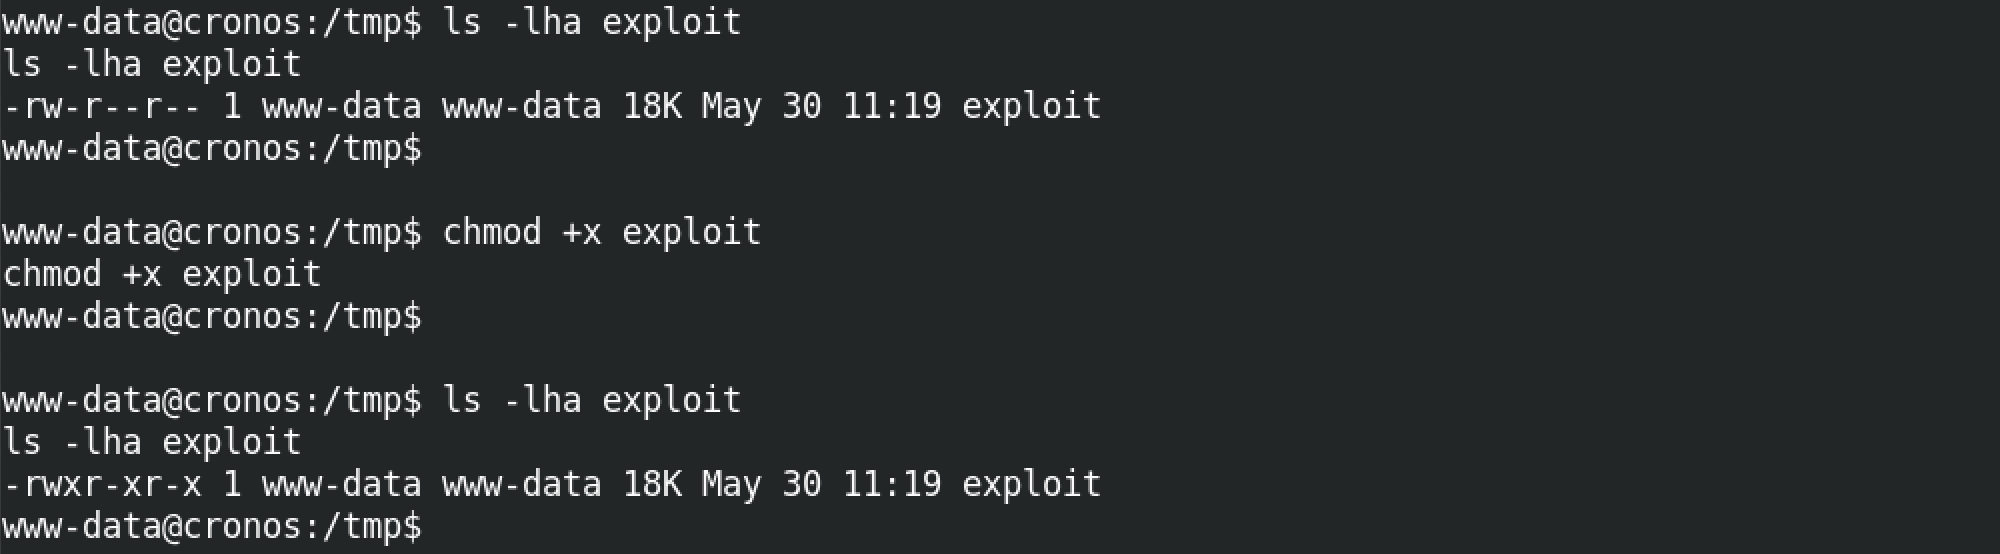 Set the executable bit on the exploit.